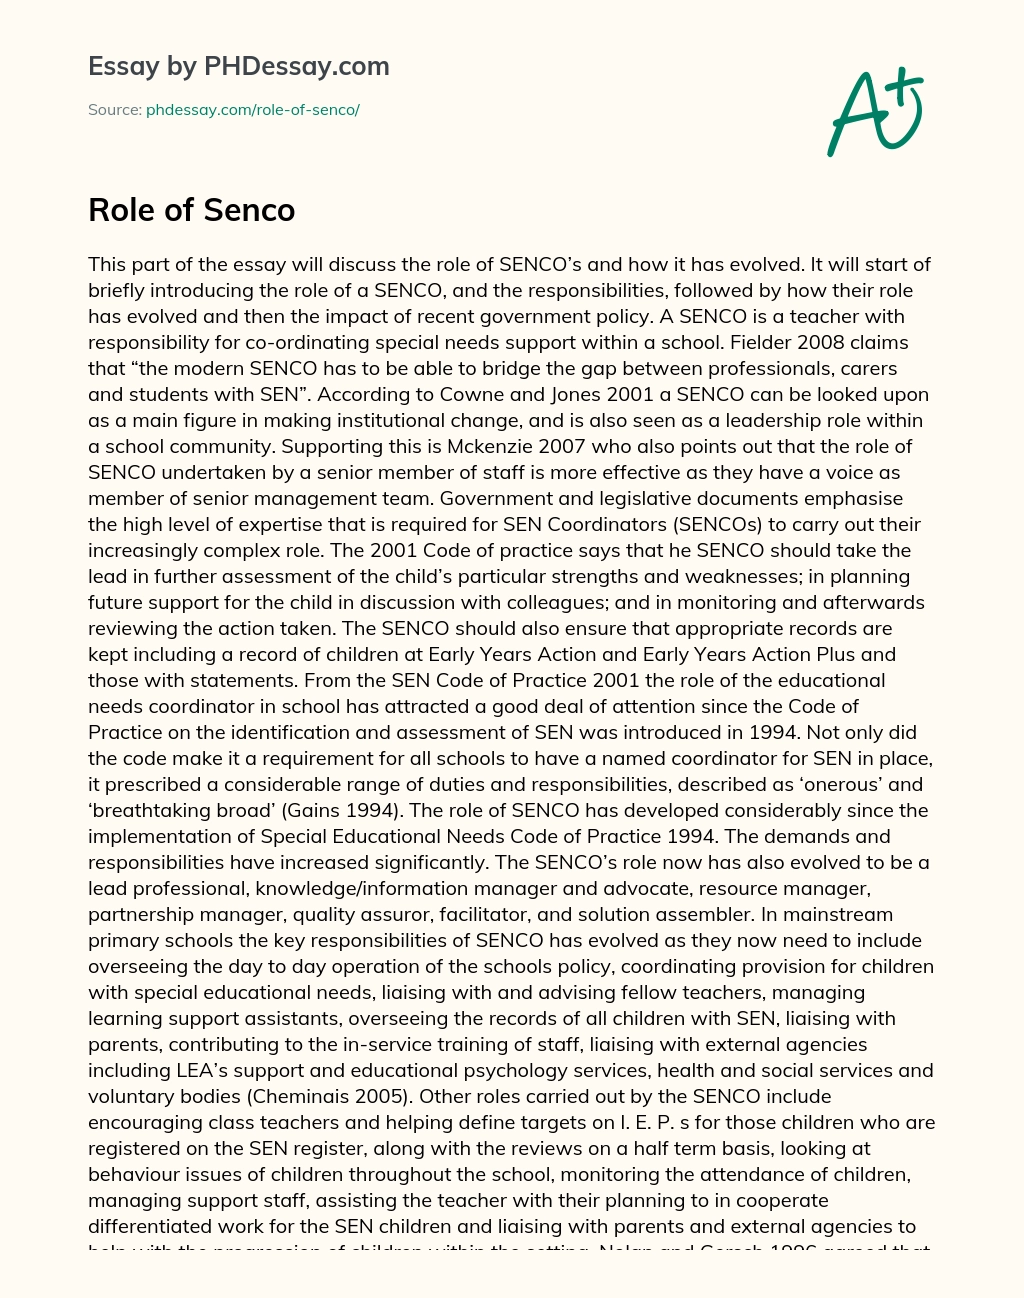 Role of Senco essay